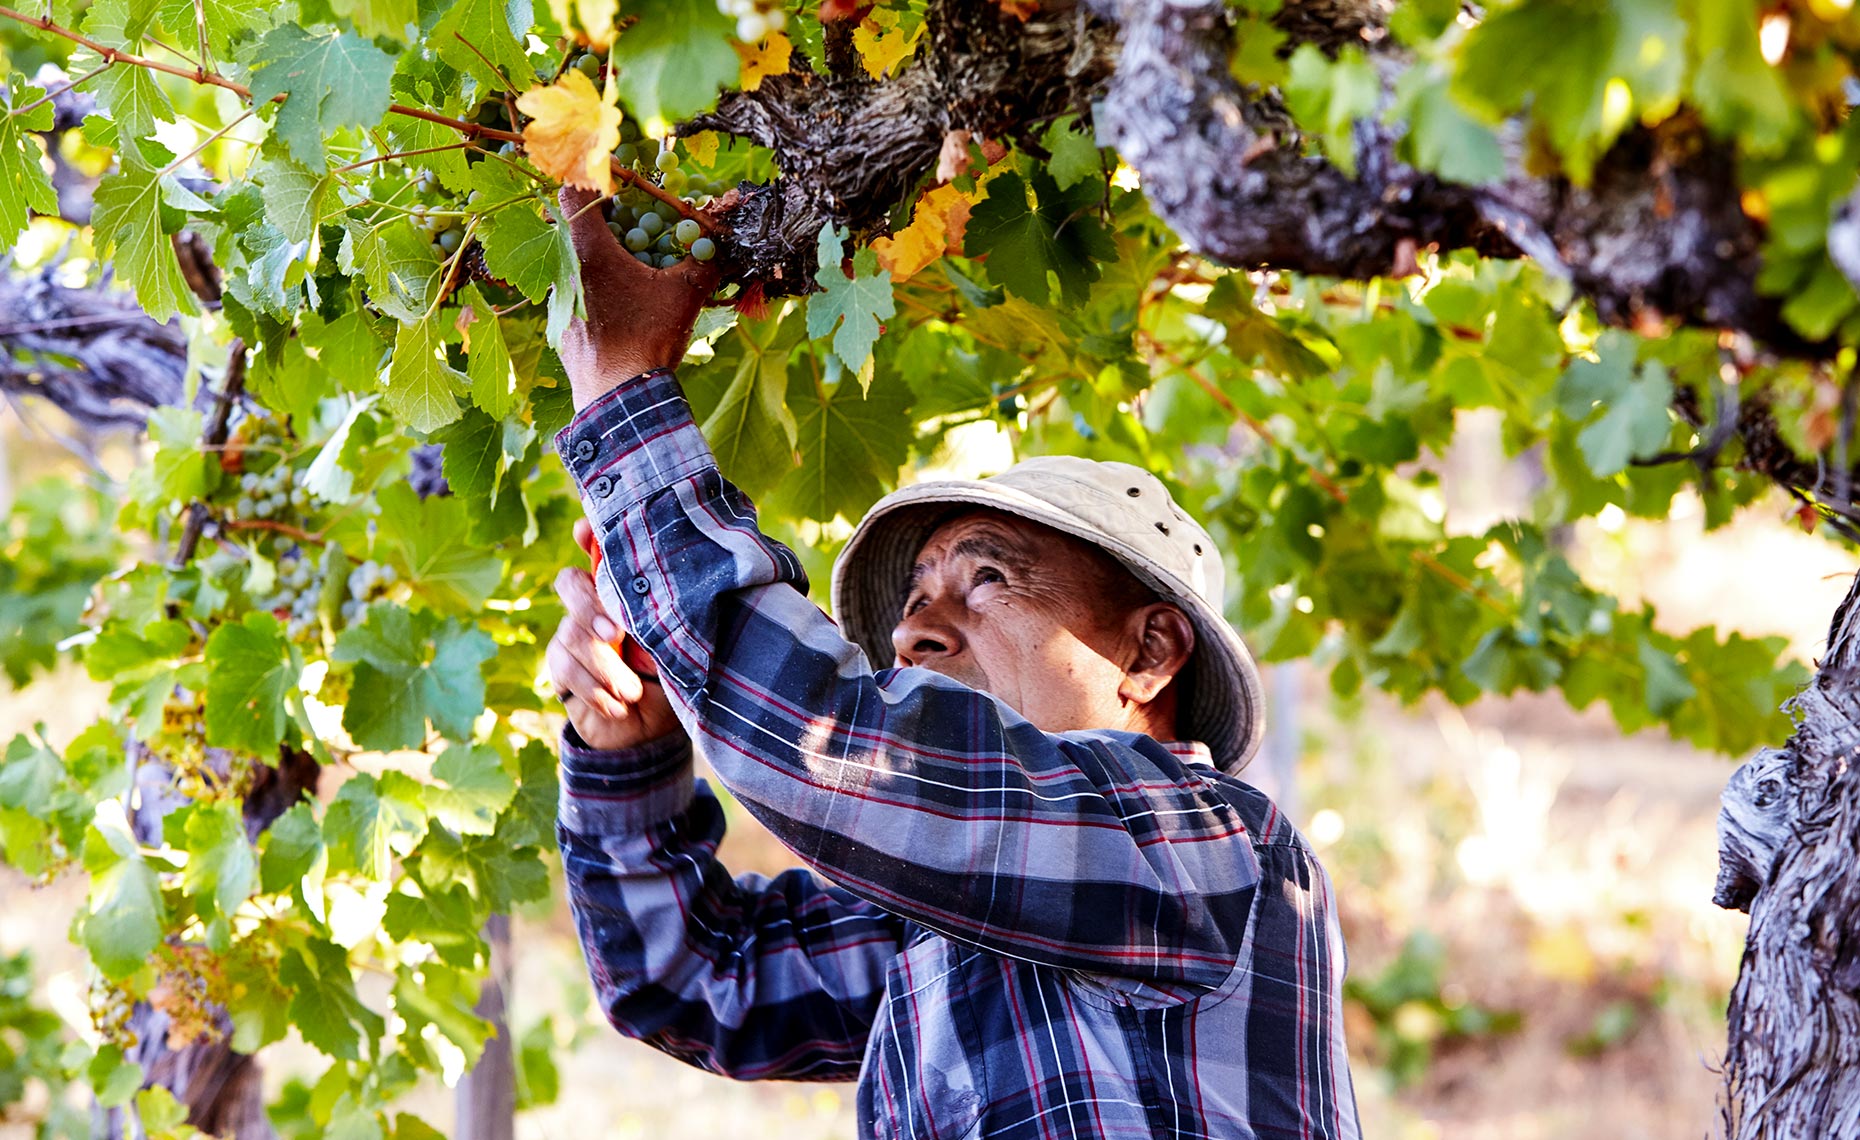 Farm worker harvesting grapes 